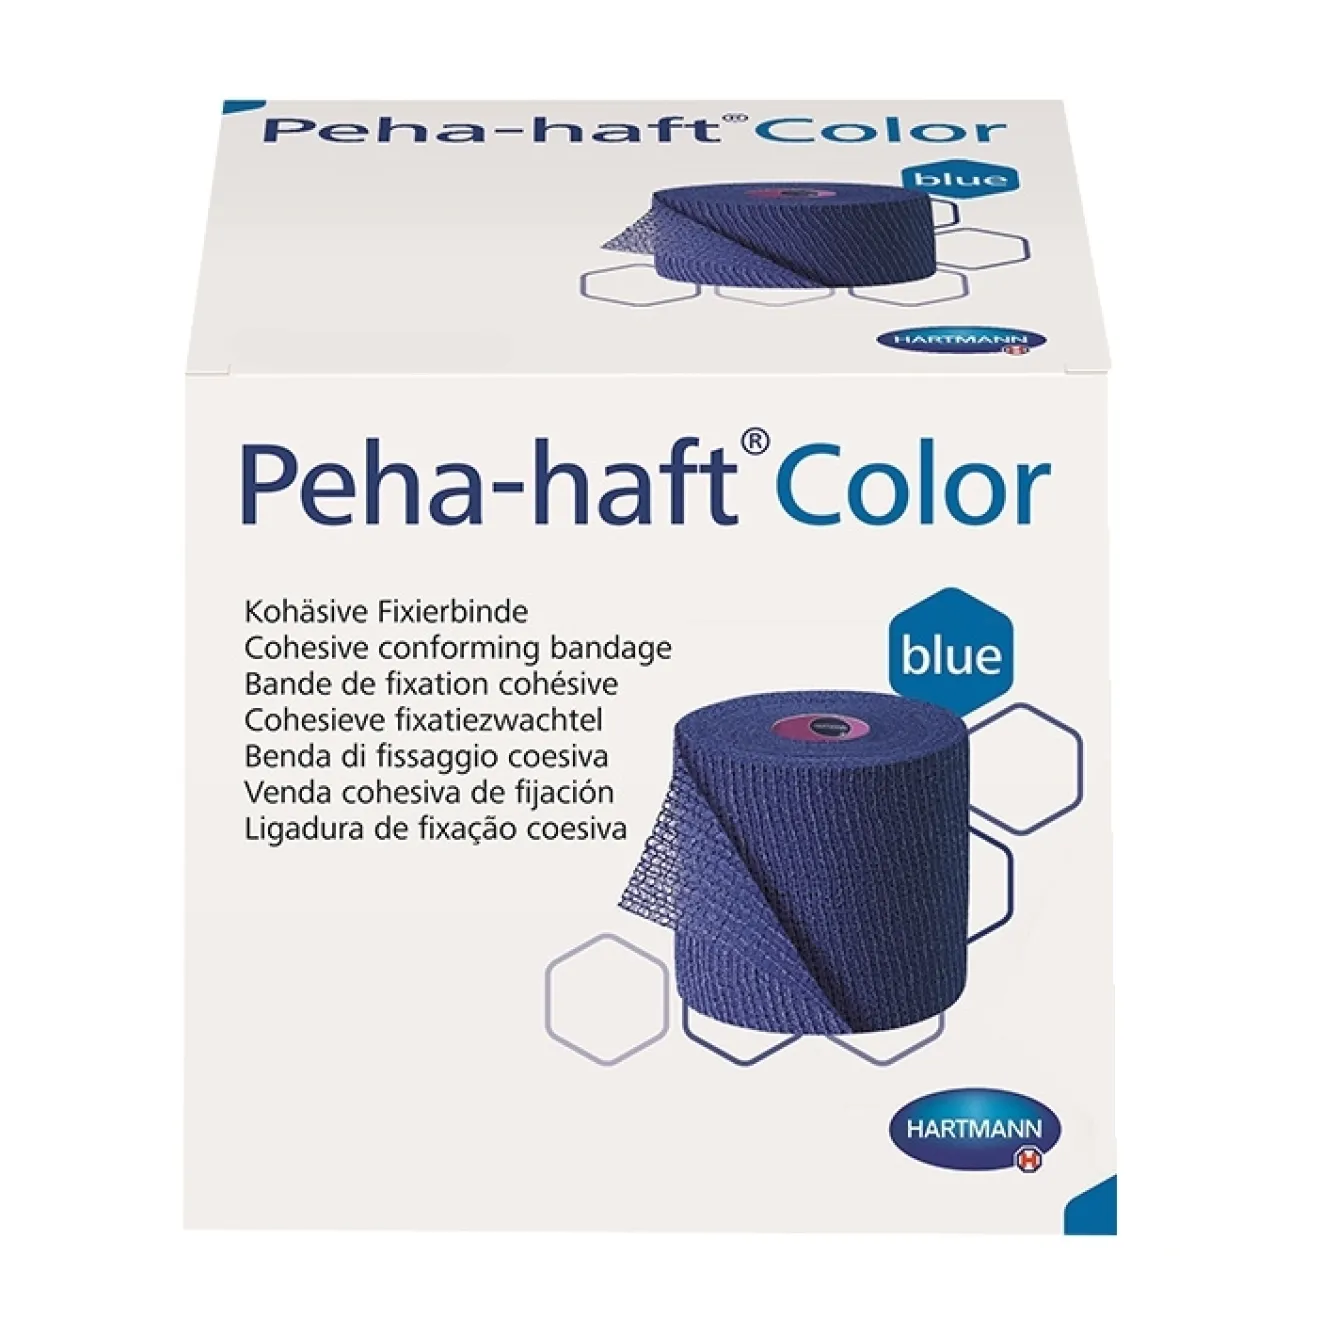 PEHA-HAFT Color Fixierbinde latexfrei 8 cmx21 m blau 1 ST